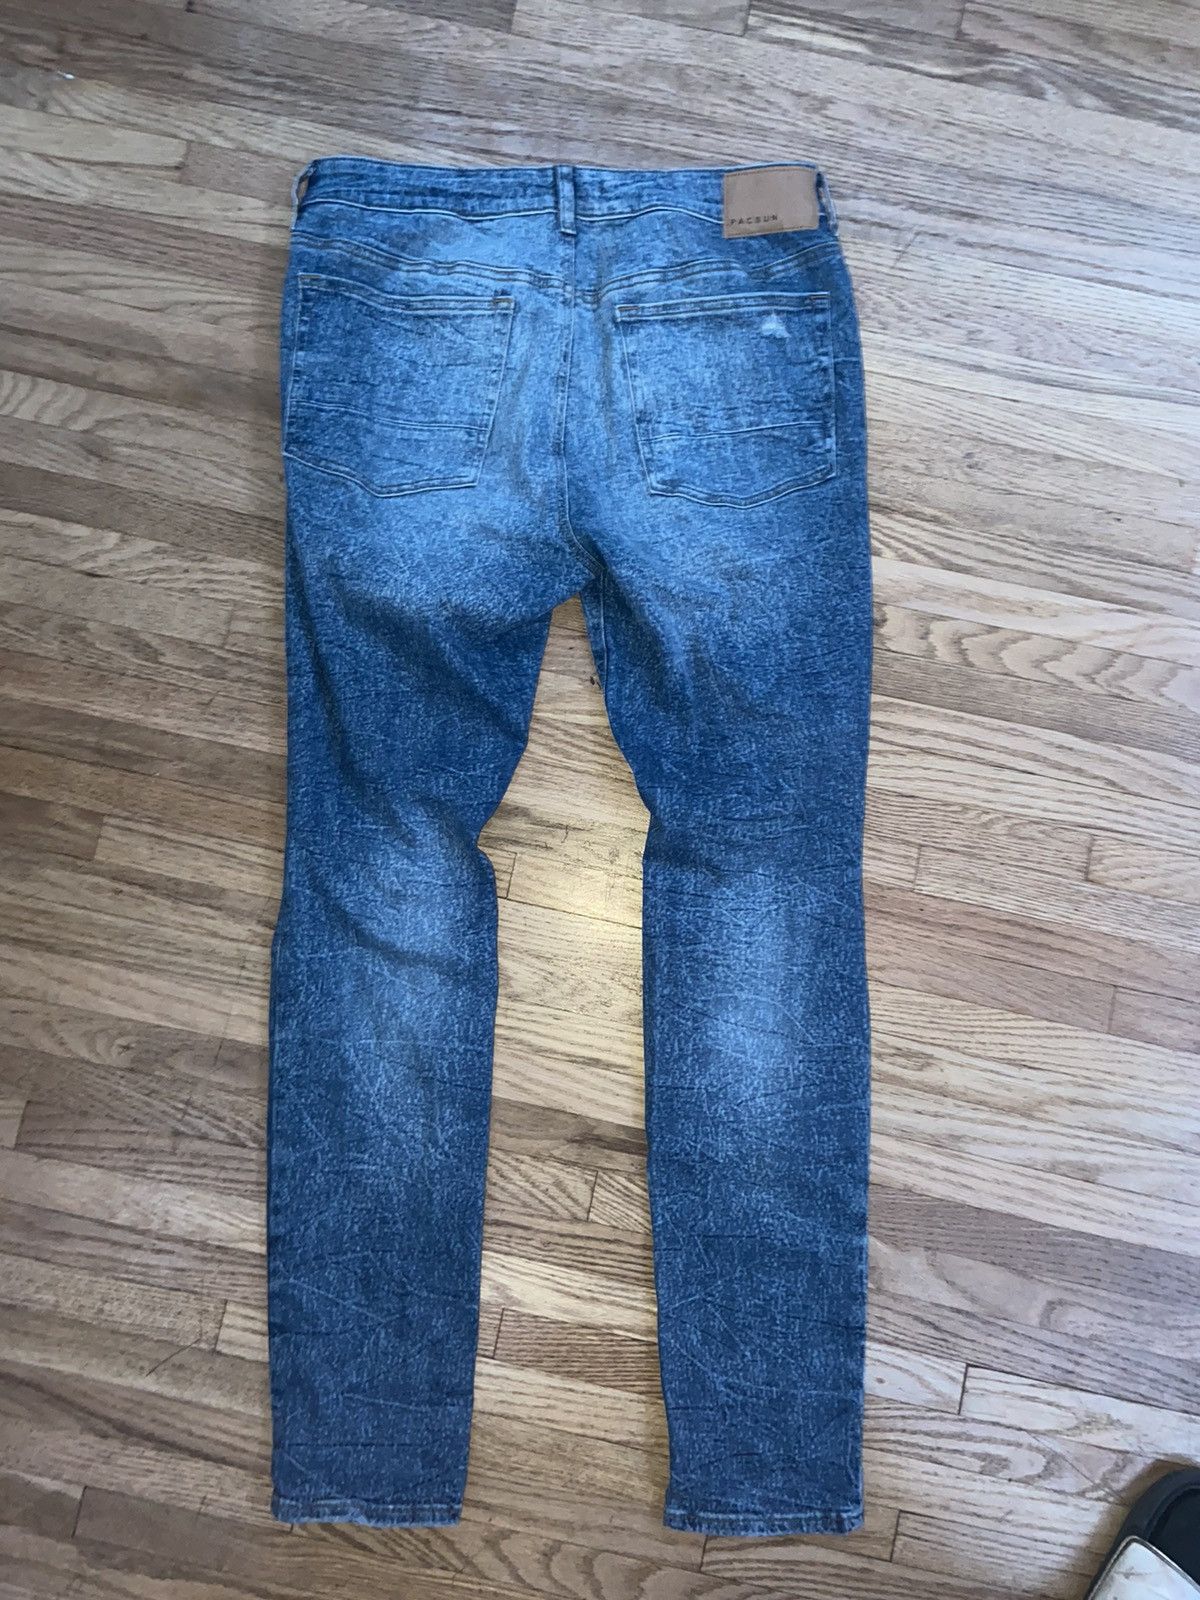 Pacsun Pacsun Ripped Jeans Size US 34 / EU 50 - 4 Thumbnail